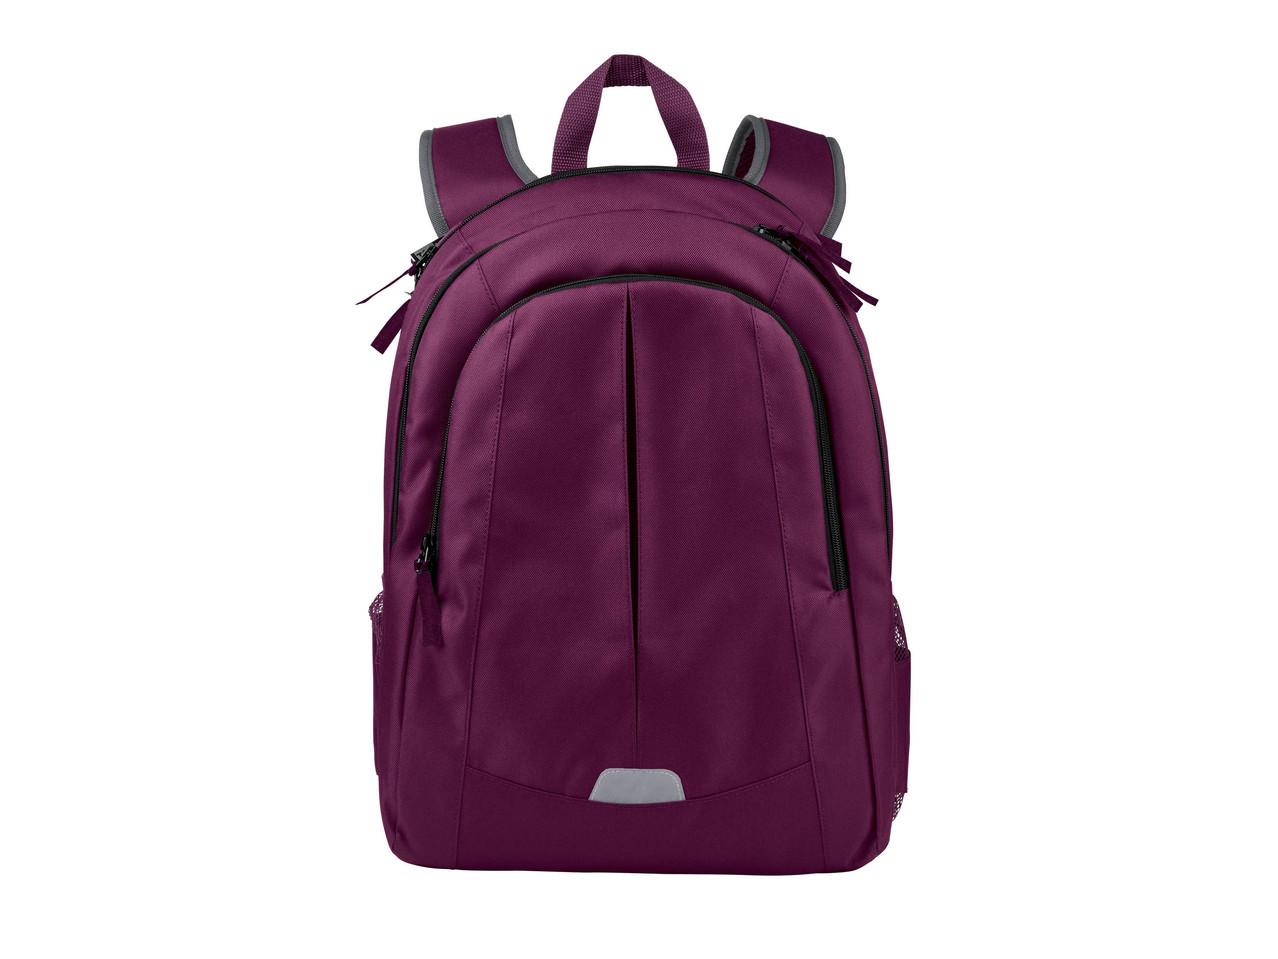 TOPMOVE 27L School Backpack